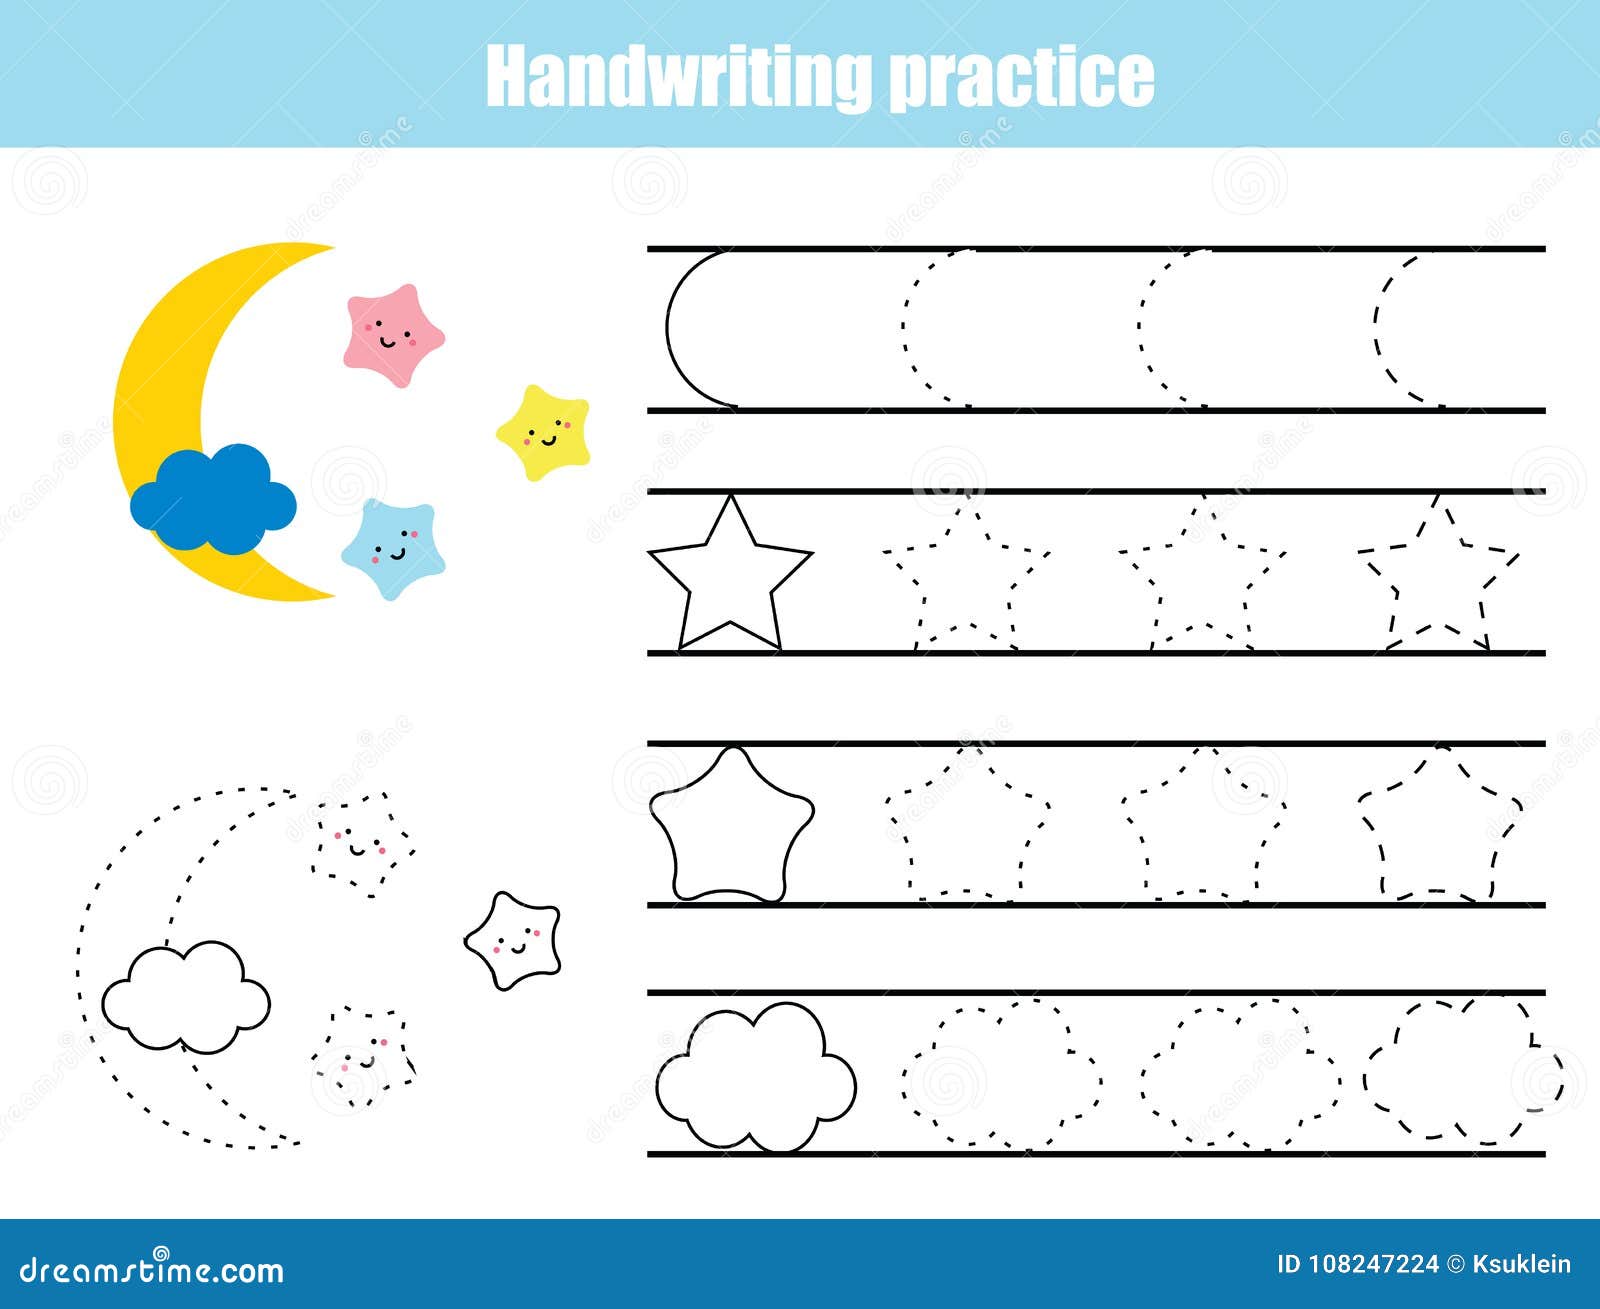 Handwriting Practice for Kids (Free Printable)